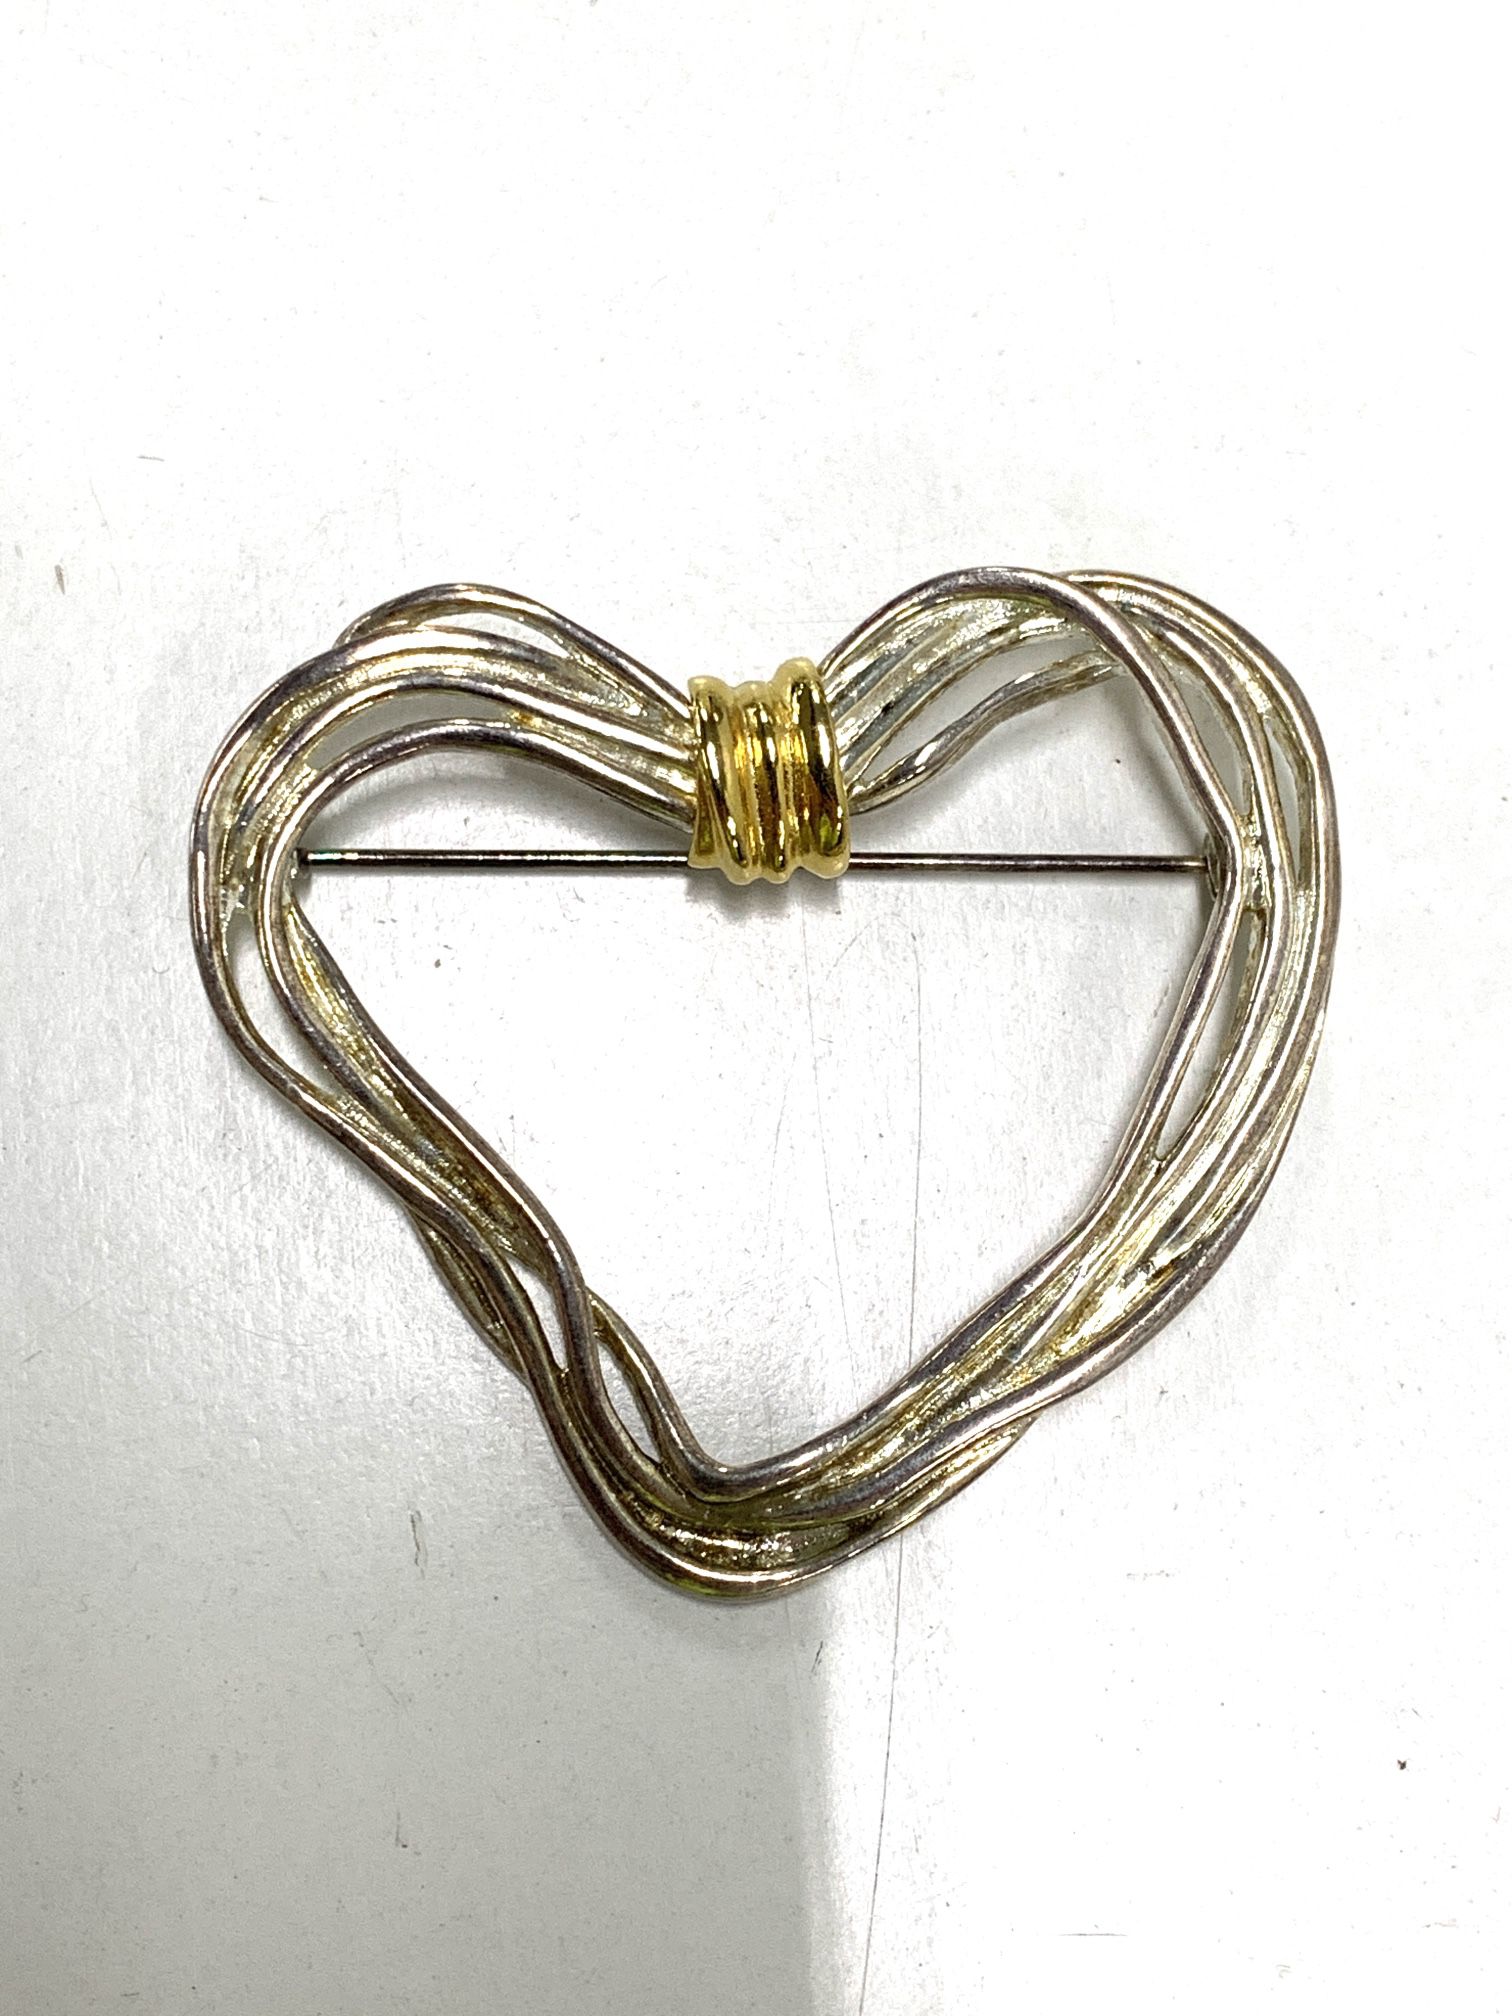 Premier Designs Jewelry Strings of Love Heart Brooch Pin Silver Gold Tone Metal